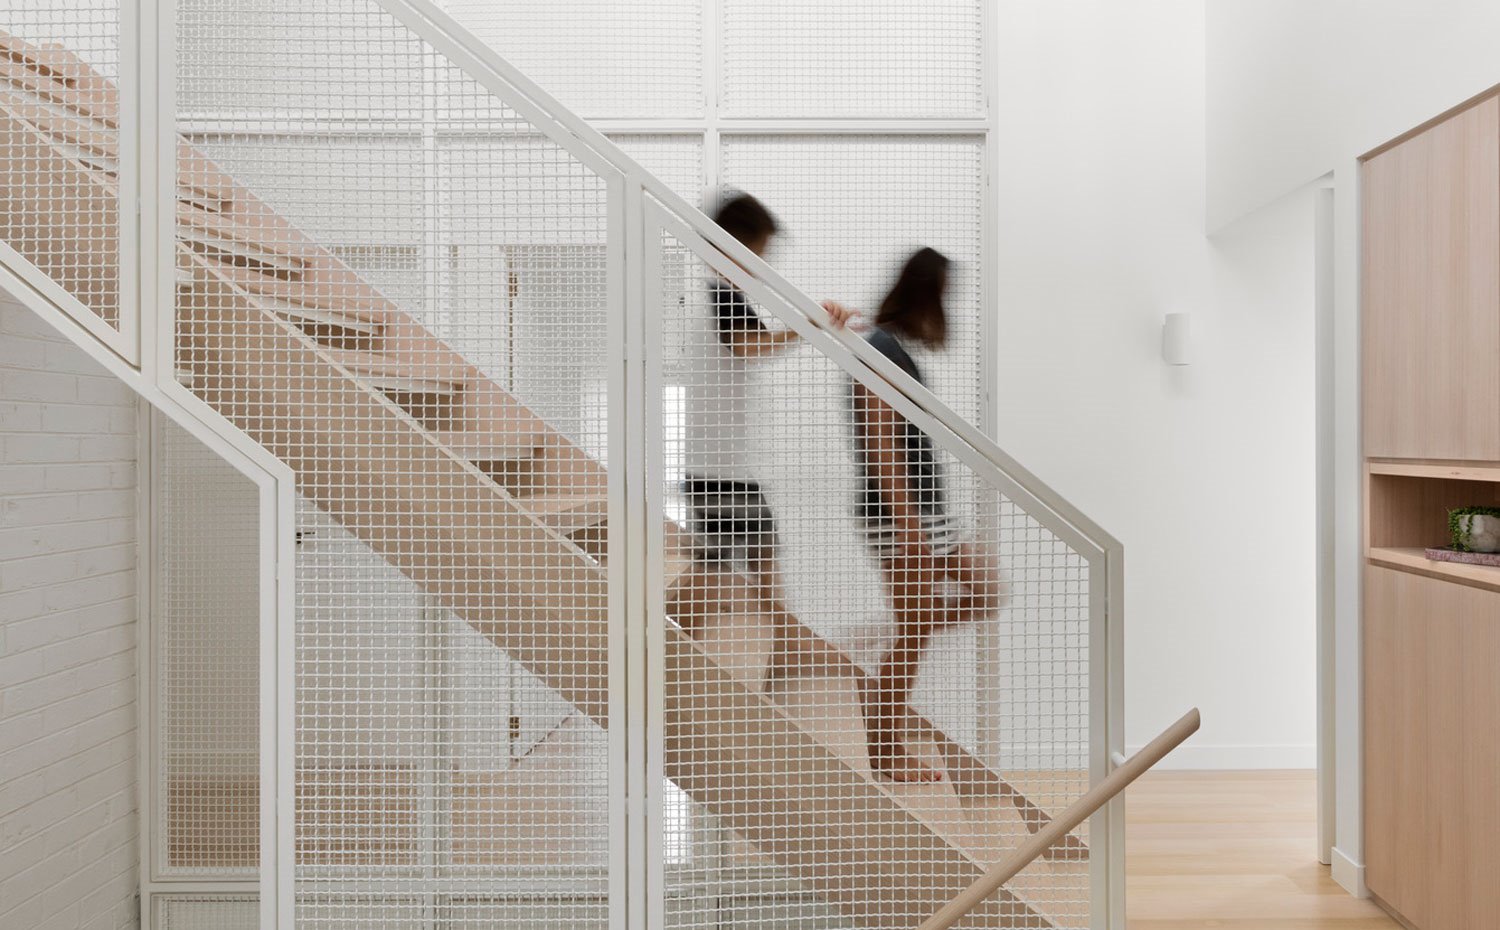 Escaleras entre niveles con estructura divisoria cromada blanca con escaleras y pasamanos de madera 